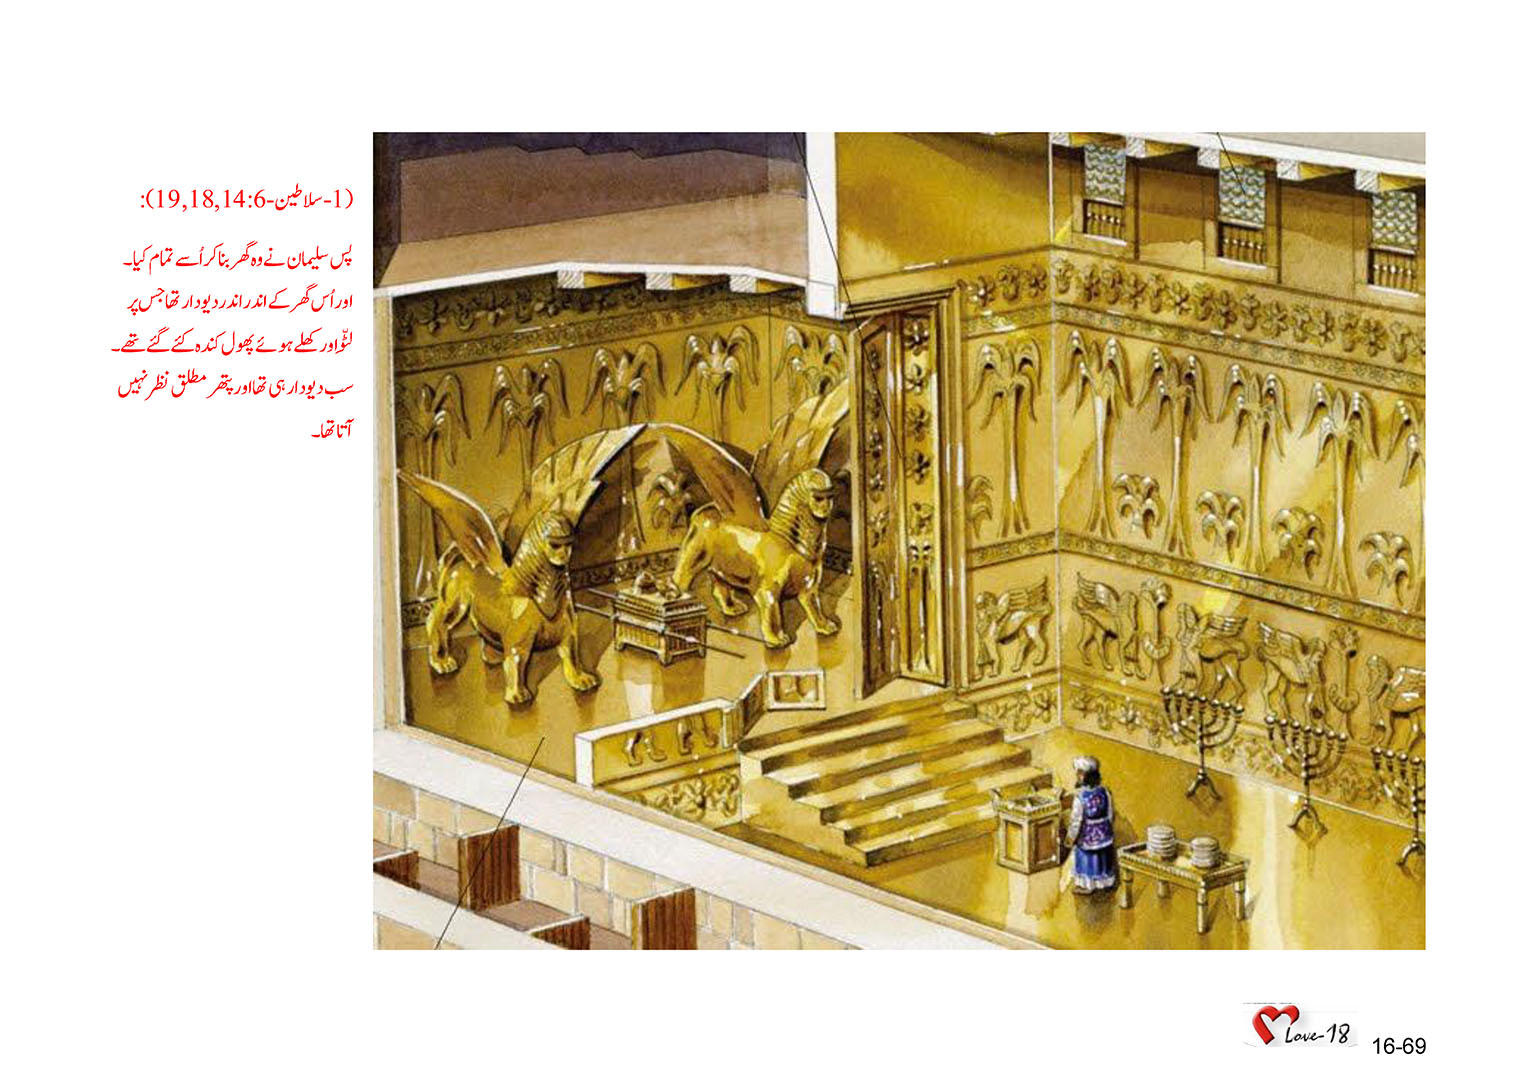 باب 16 - سبق 51 - بادشاہ  سلیمان  نے  ہیکل  تعمیر  کیا